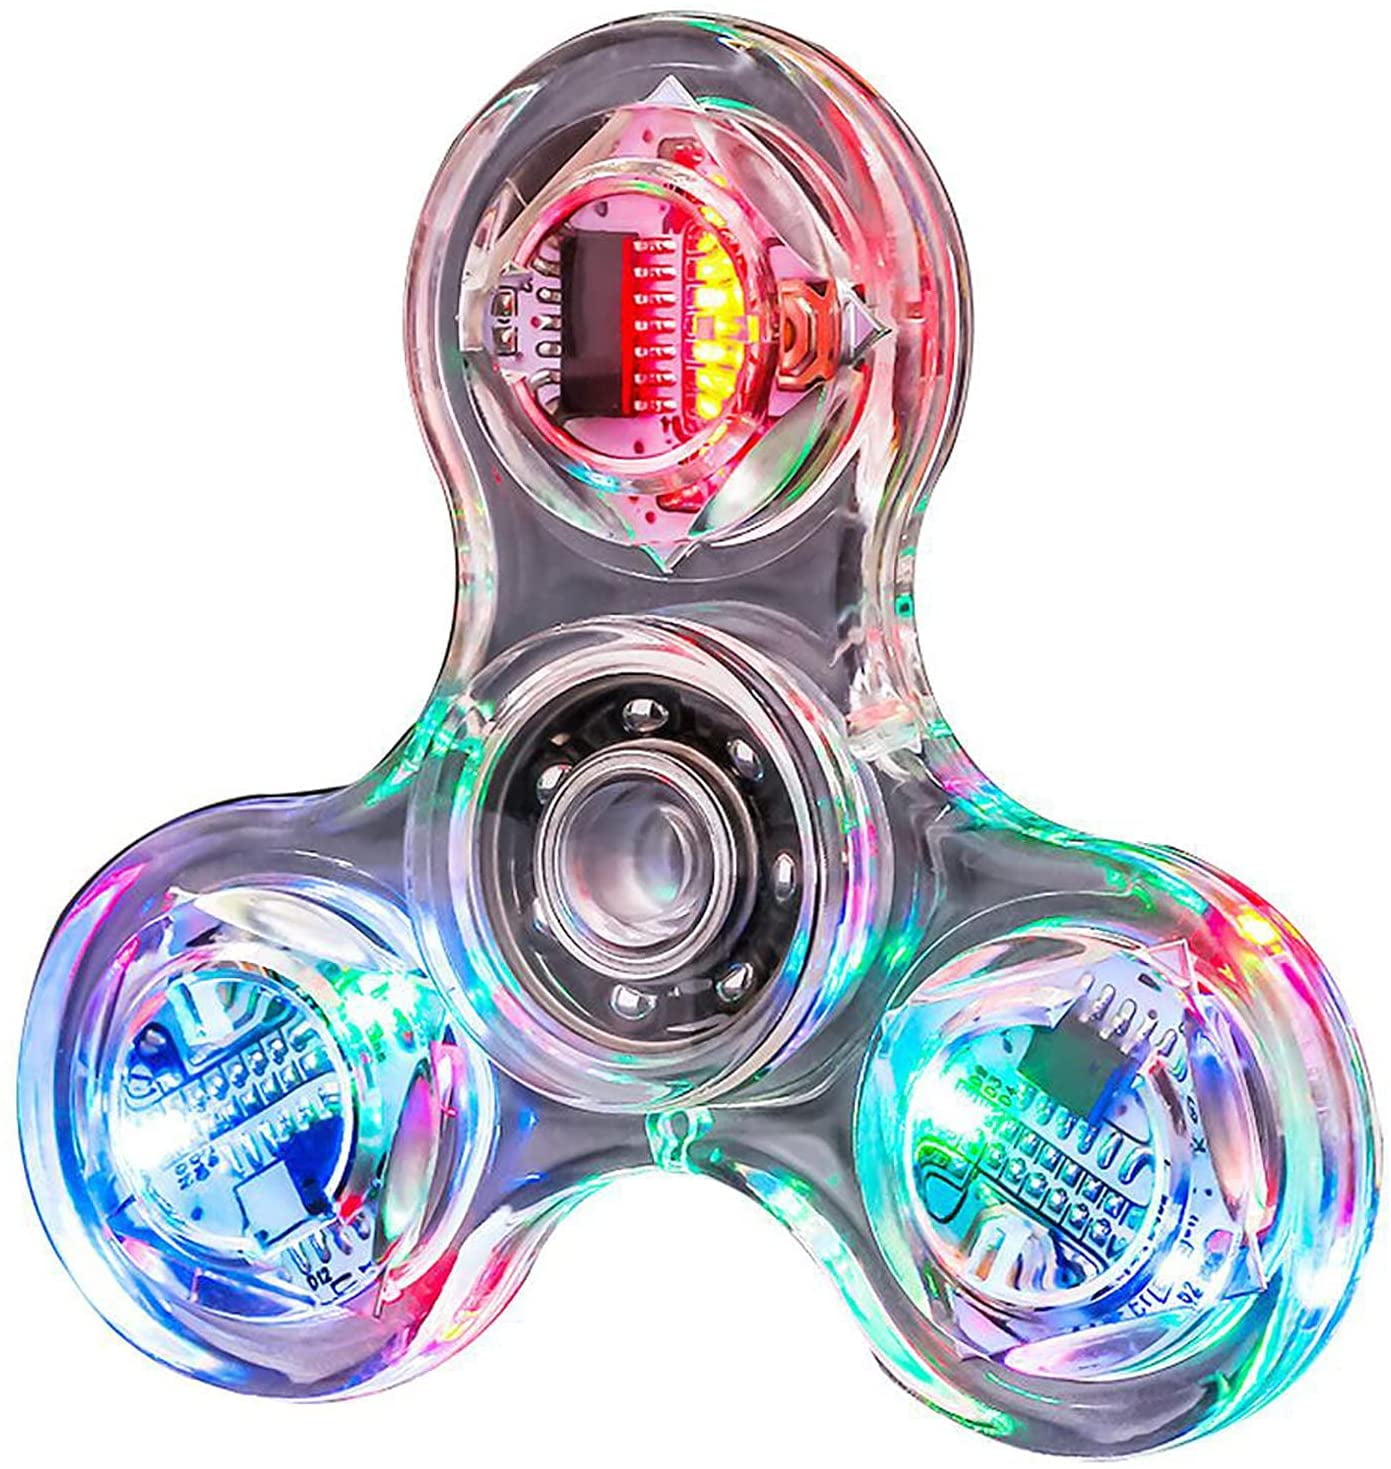 DEL Stylos Fidget Spinner Main Top Glow in Dark Toy Stress Relief X6K2 